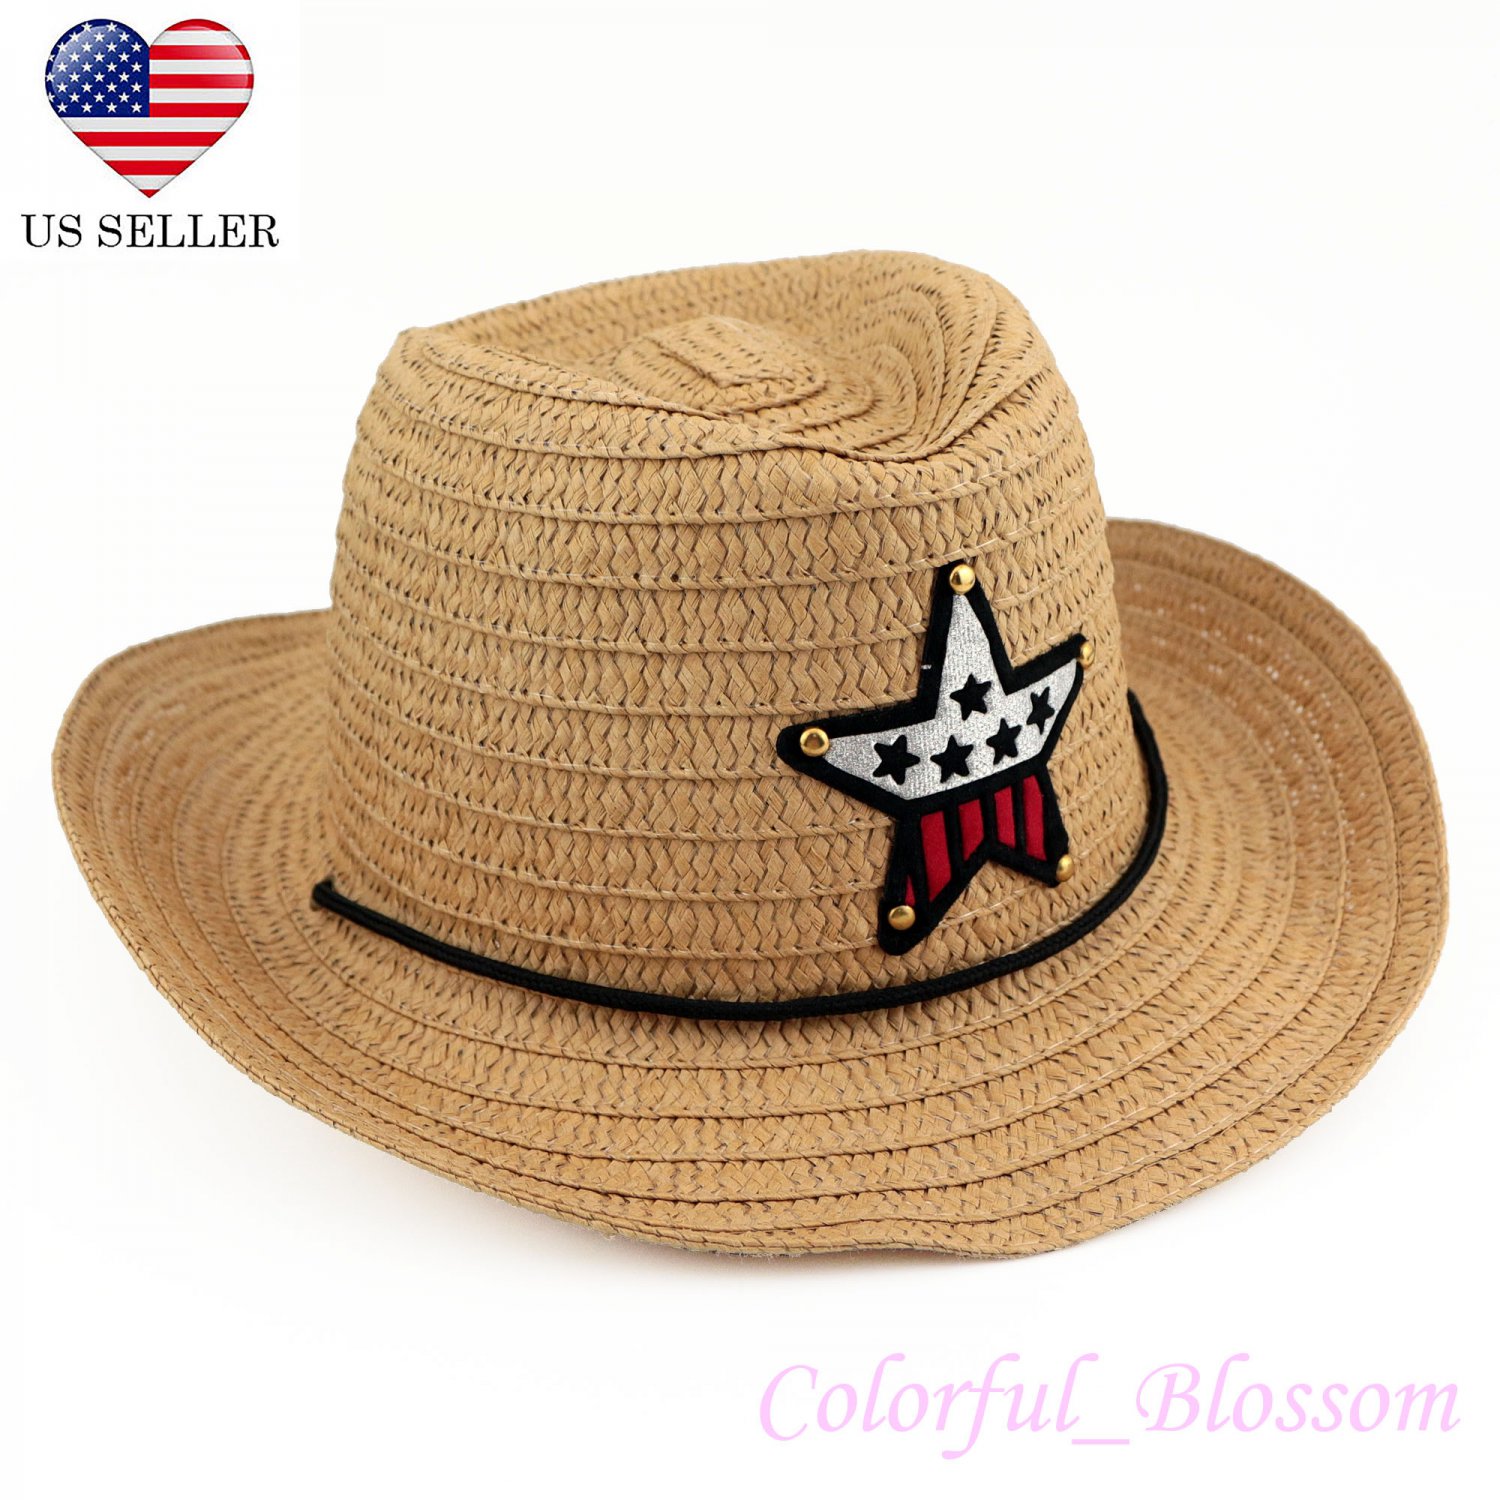 Boy's Girl's Brown Summer Wide Brim Floppy Cowboy Beach Sun Visor Hat HK18